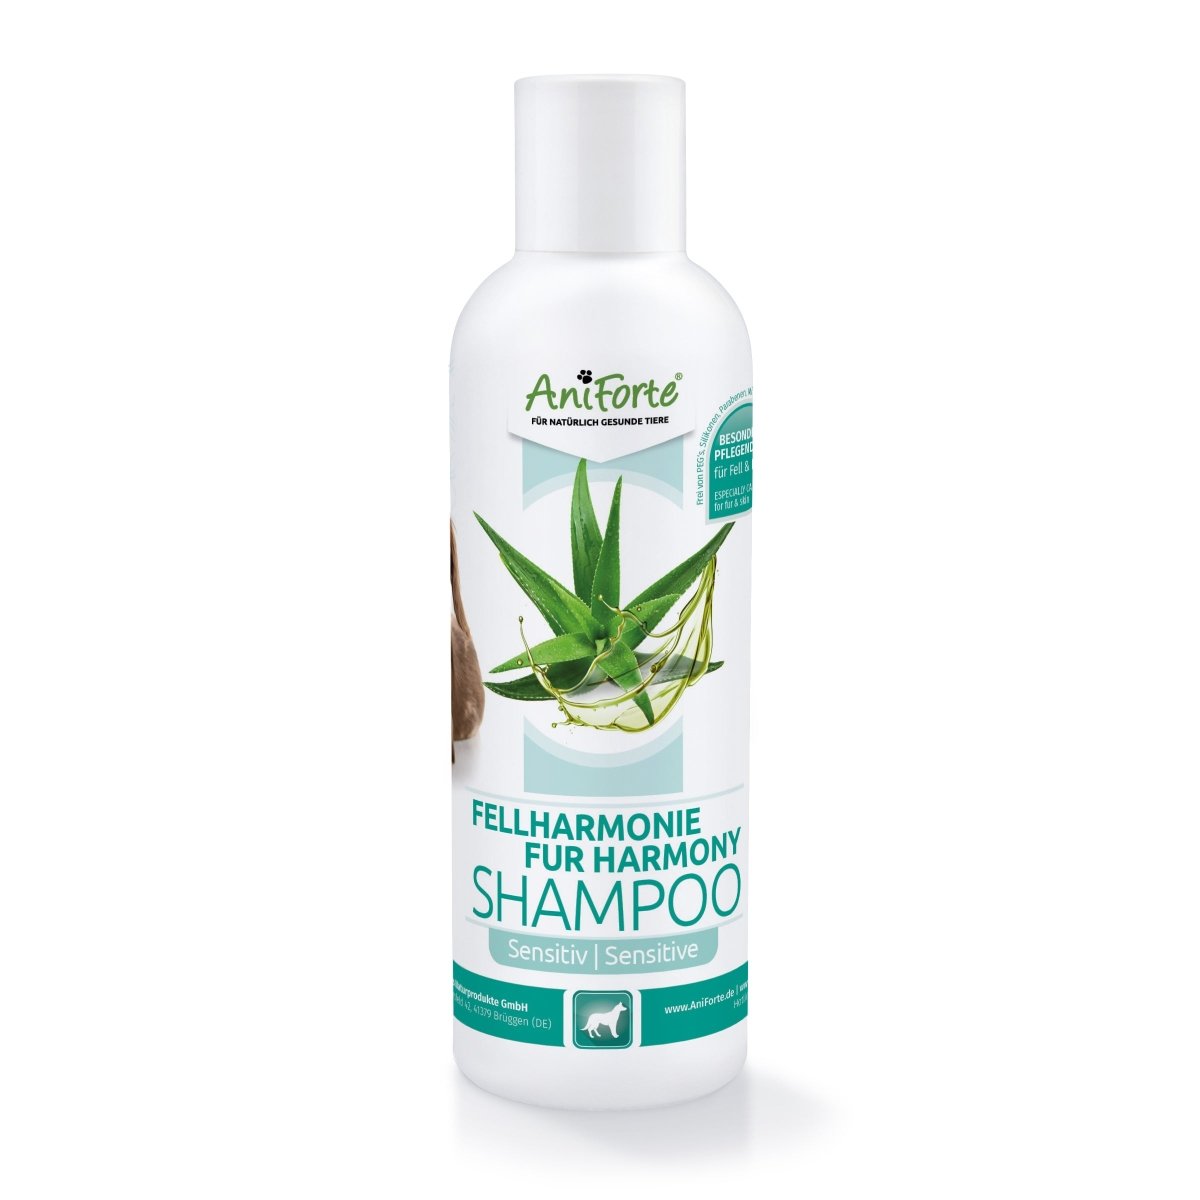 Fellharmonie Shampoo Sensitiv von AniForte